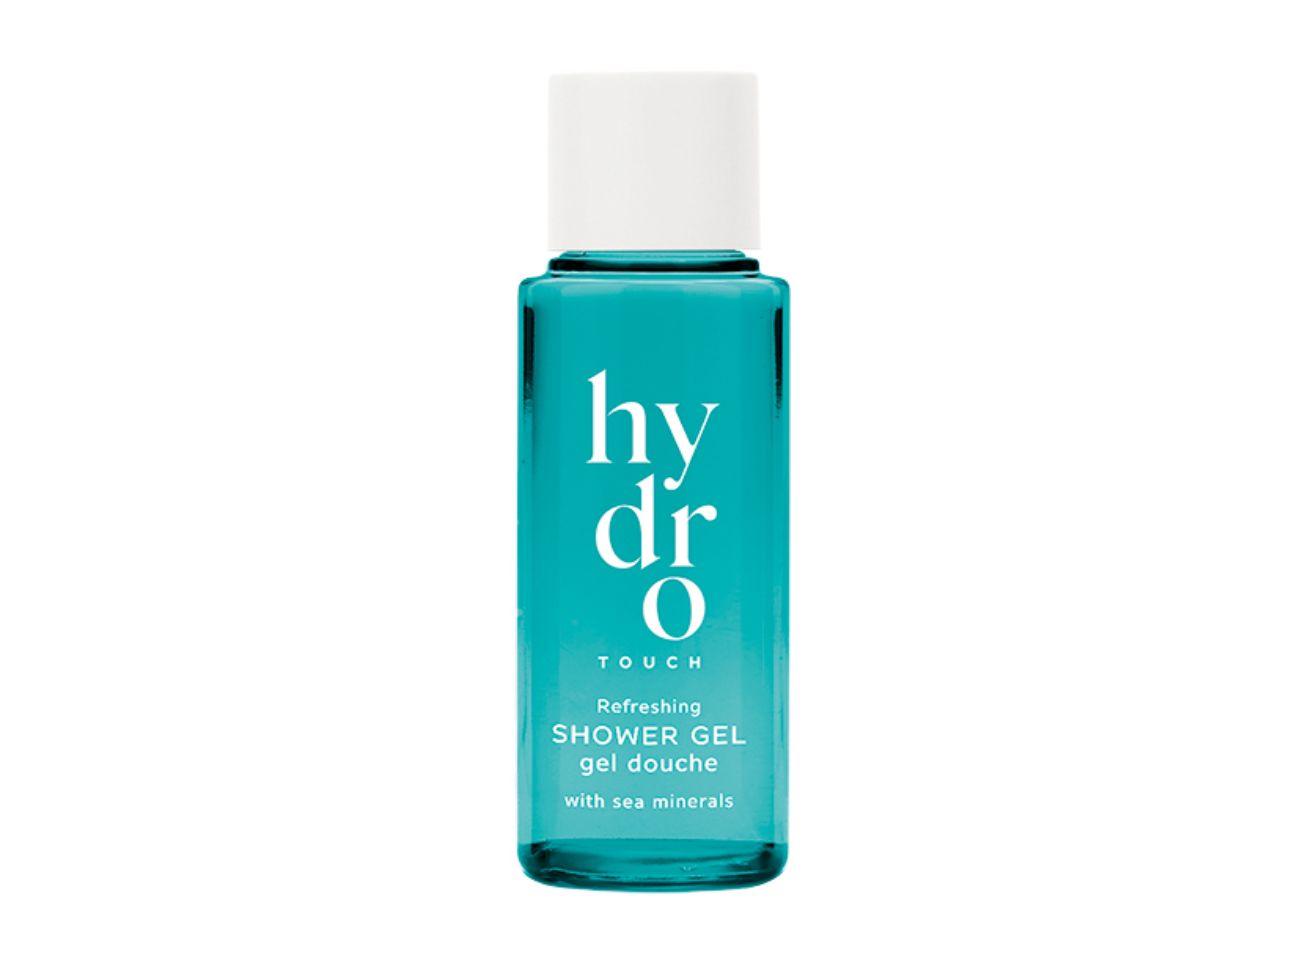 Hydro Basics Revitalizing Shampoo, 30ml